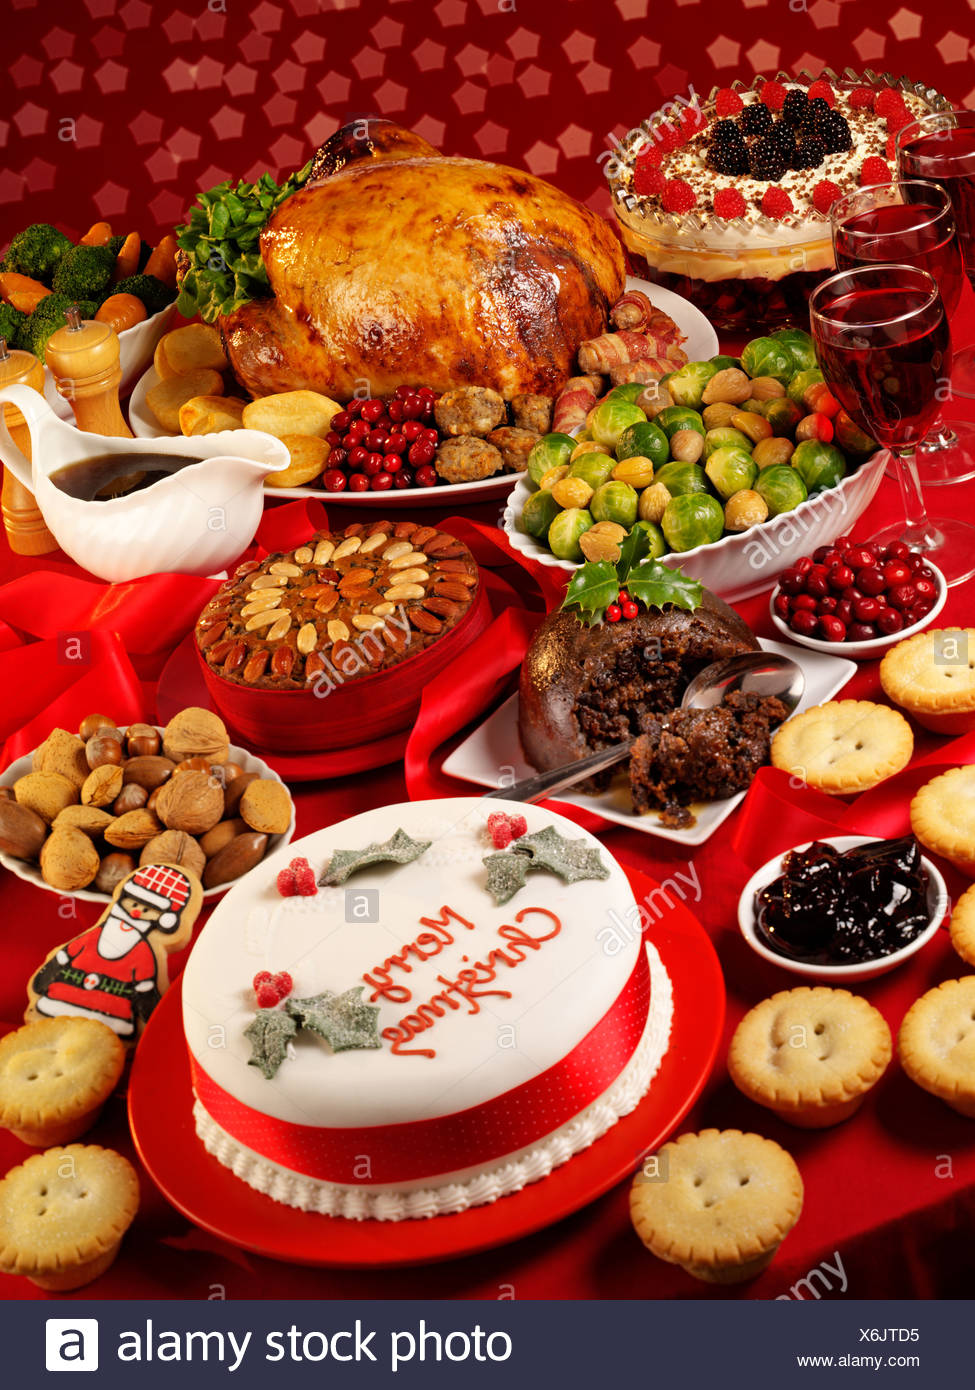 Roast Turkey Christmas Pudding High Resolution Stock Photography and ...